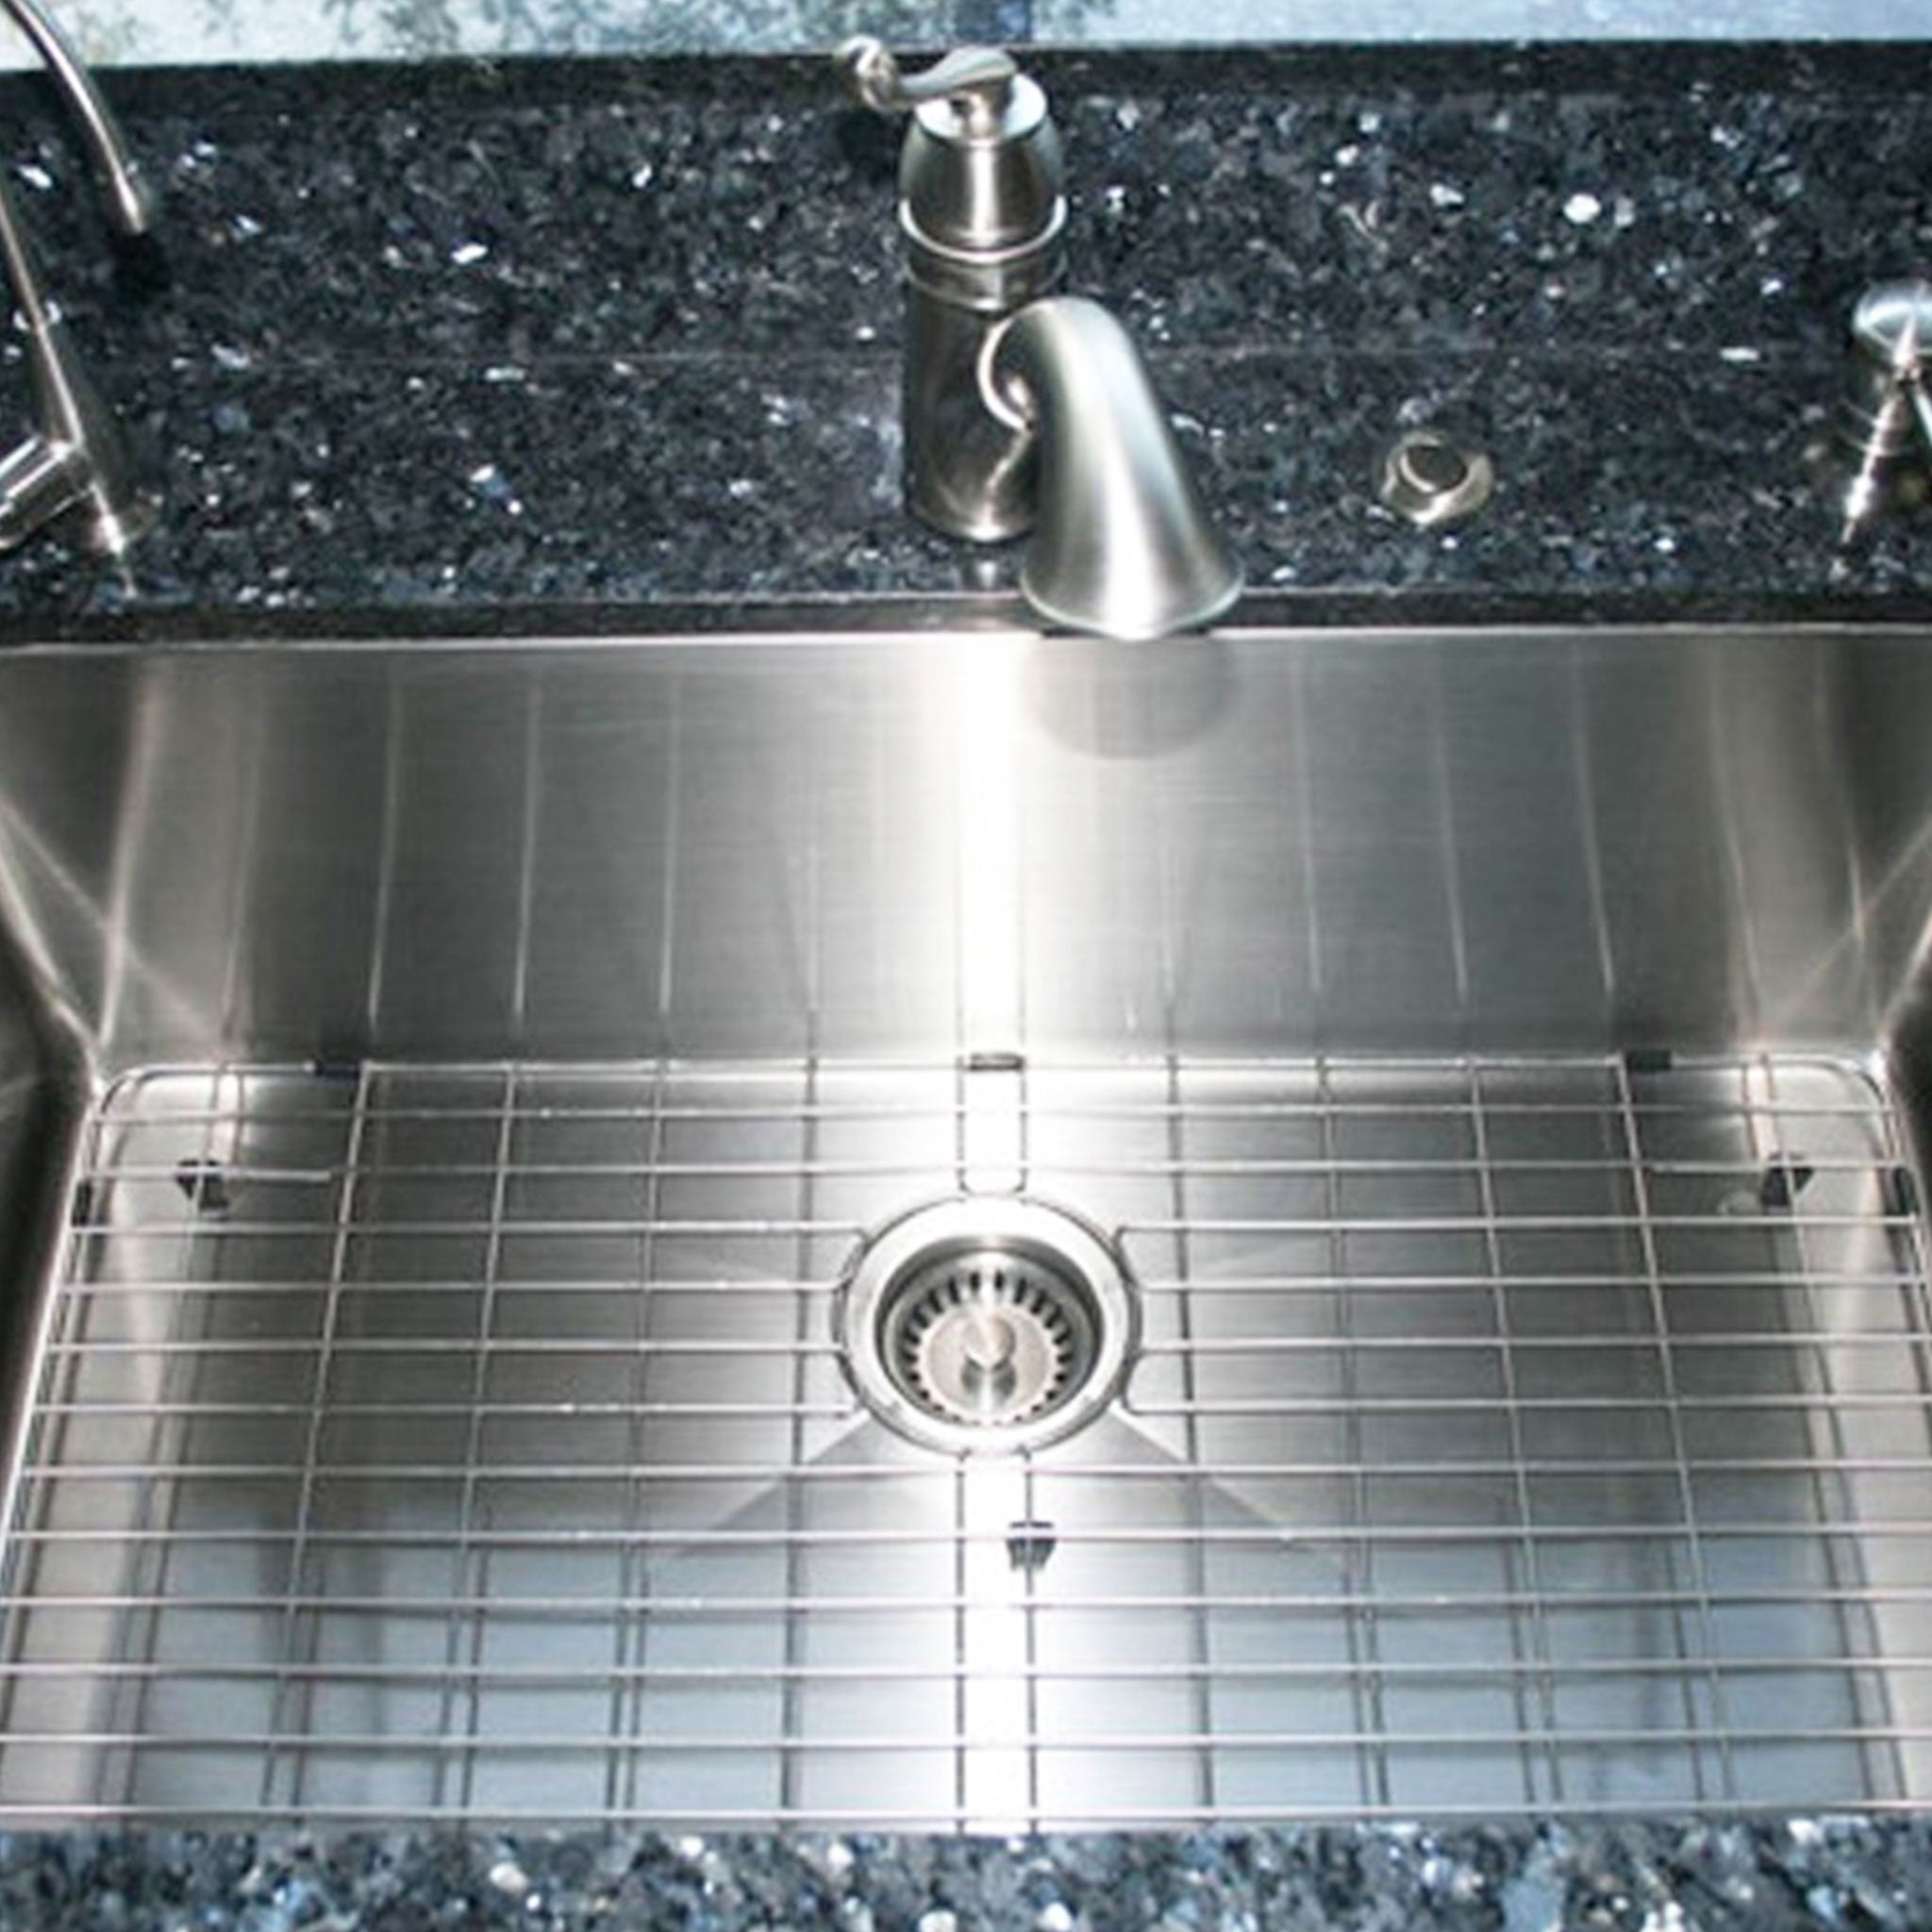 GRID - 33 stainless steel sink grid - center drain (GR-5AS33) – Create  Good Sinks